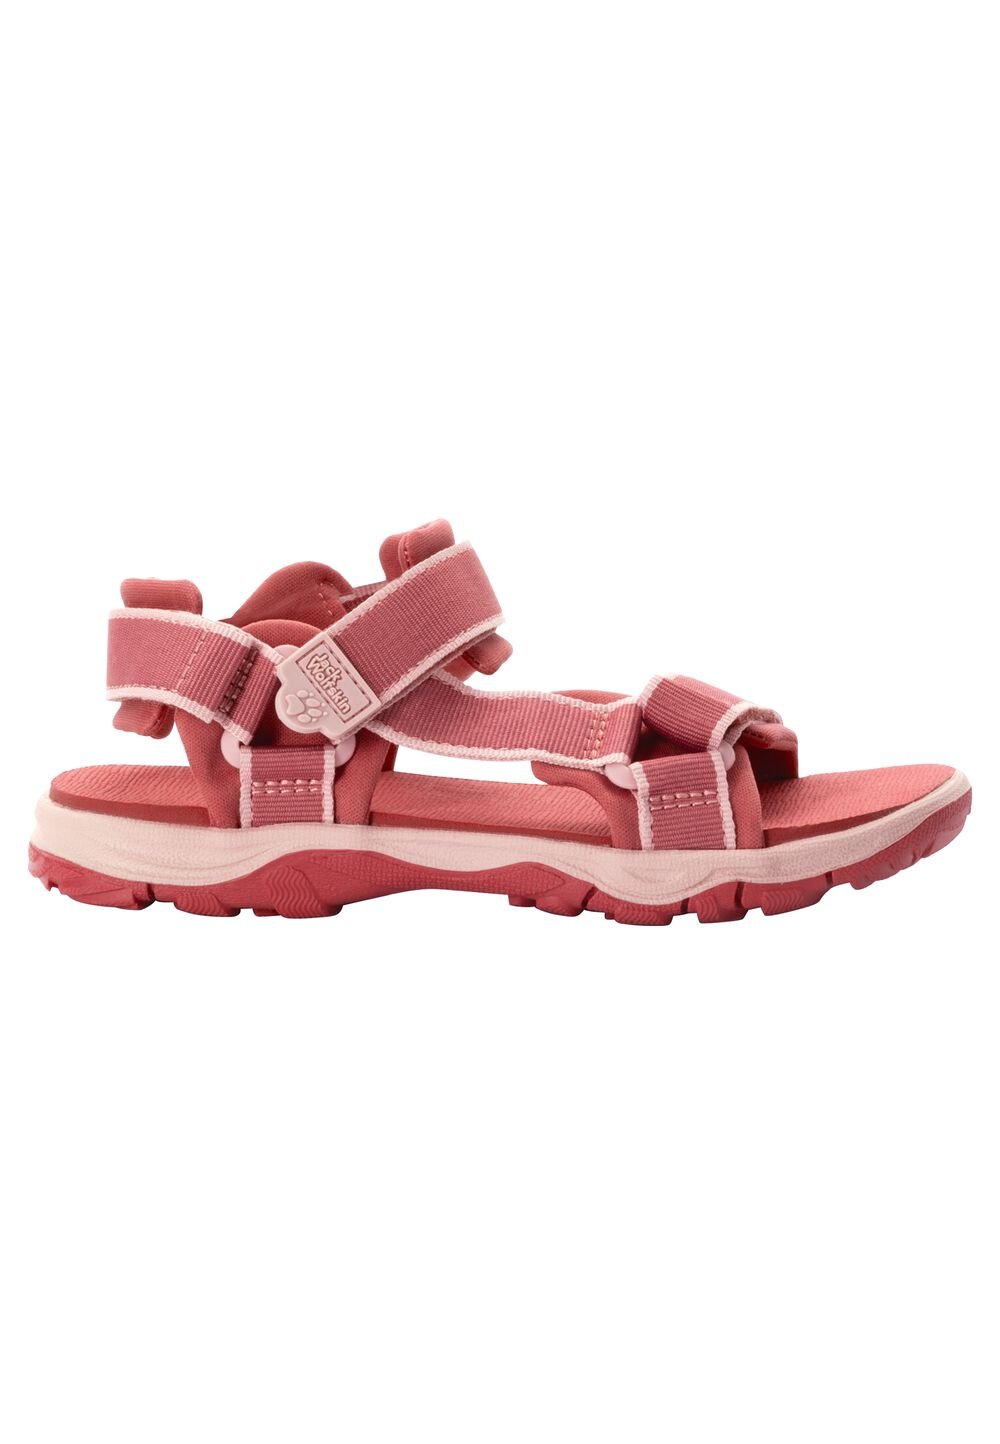 Jack Wolfskin Seven Seas 3 Kids Kinderen sandalen 37 soft pink soft pink